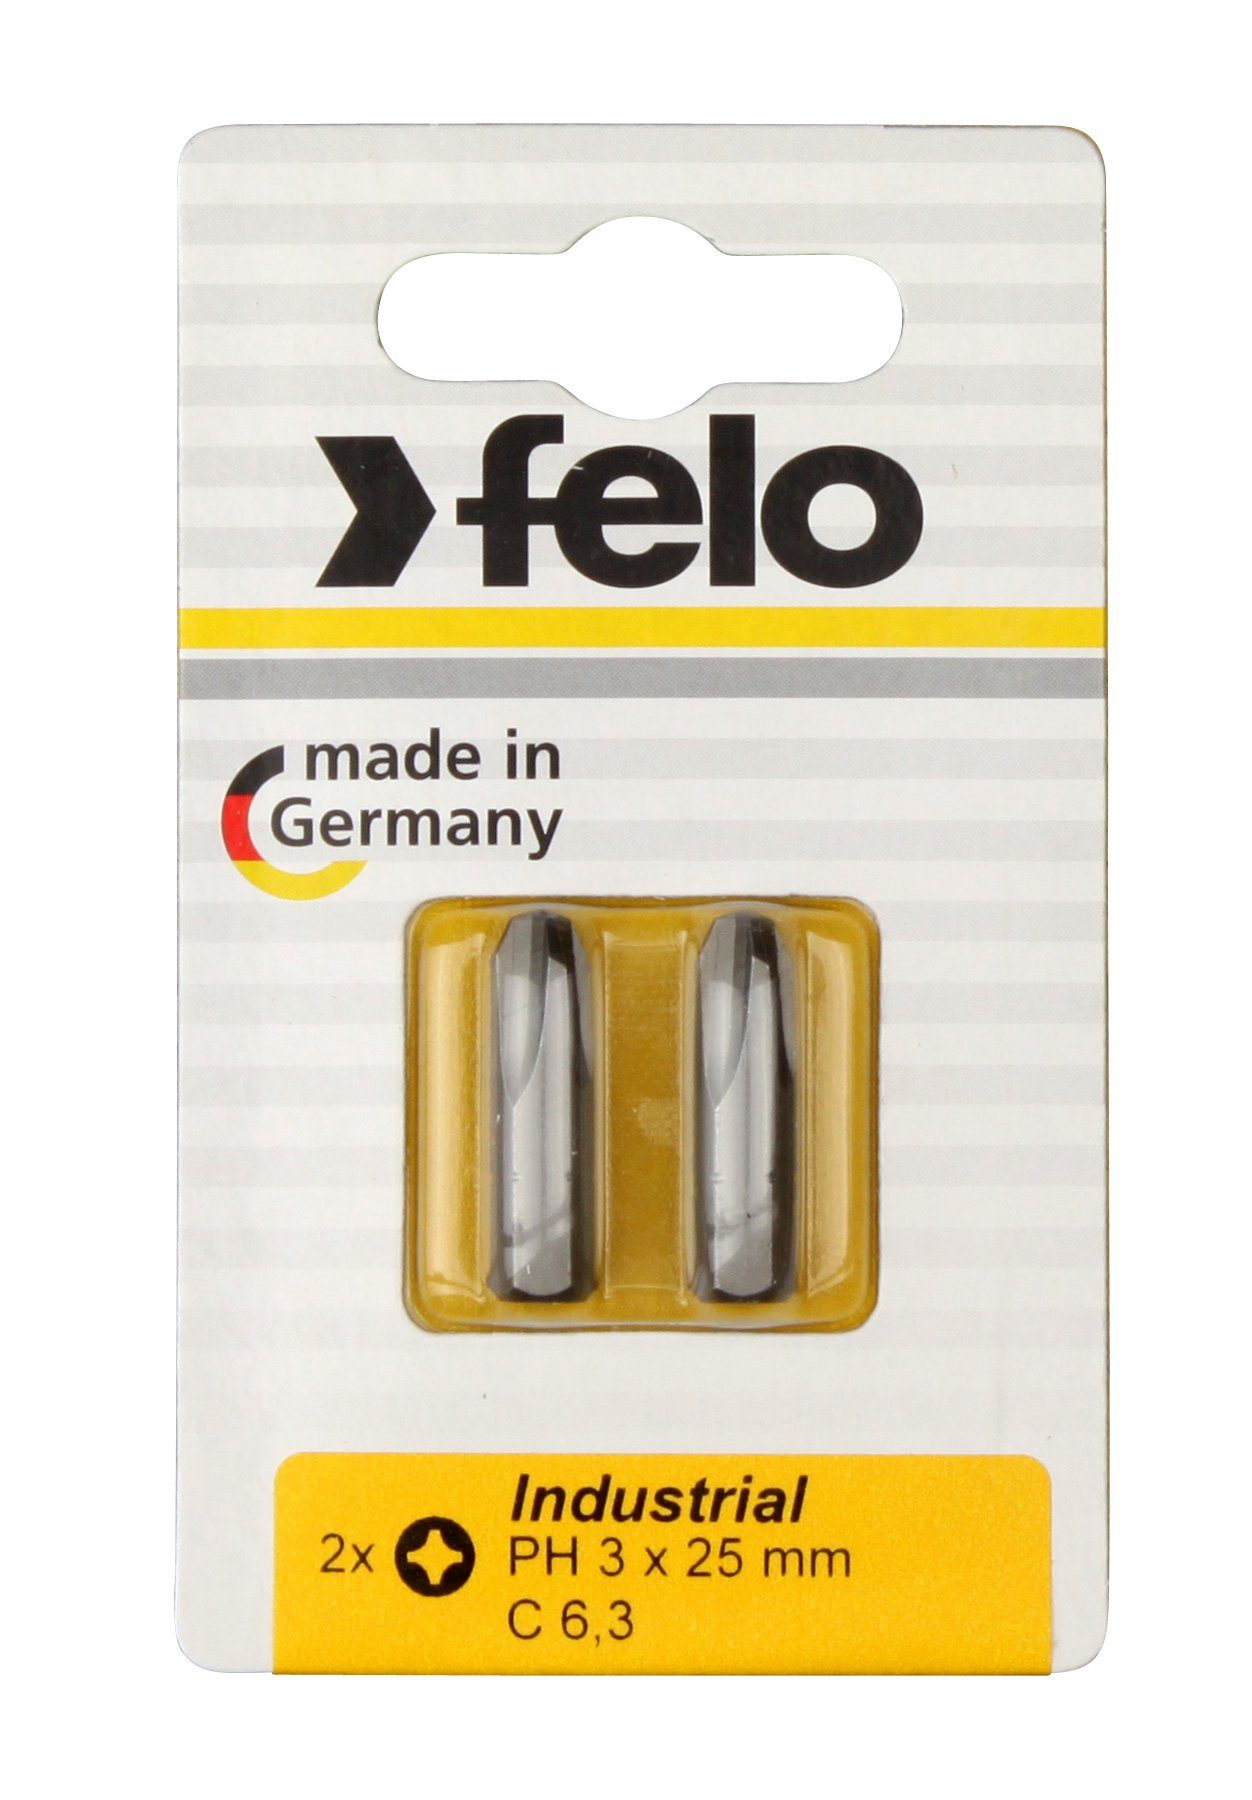 Felo Kreuzschlitz-Bit Felo Bit, Industrie C 6,3 x 25mm, 5 Stk auf Karte 5 x PH 3